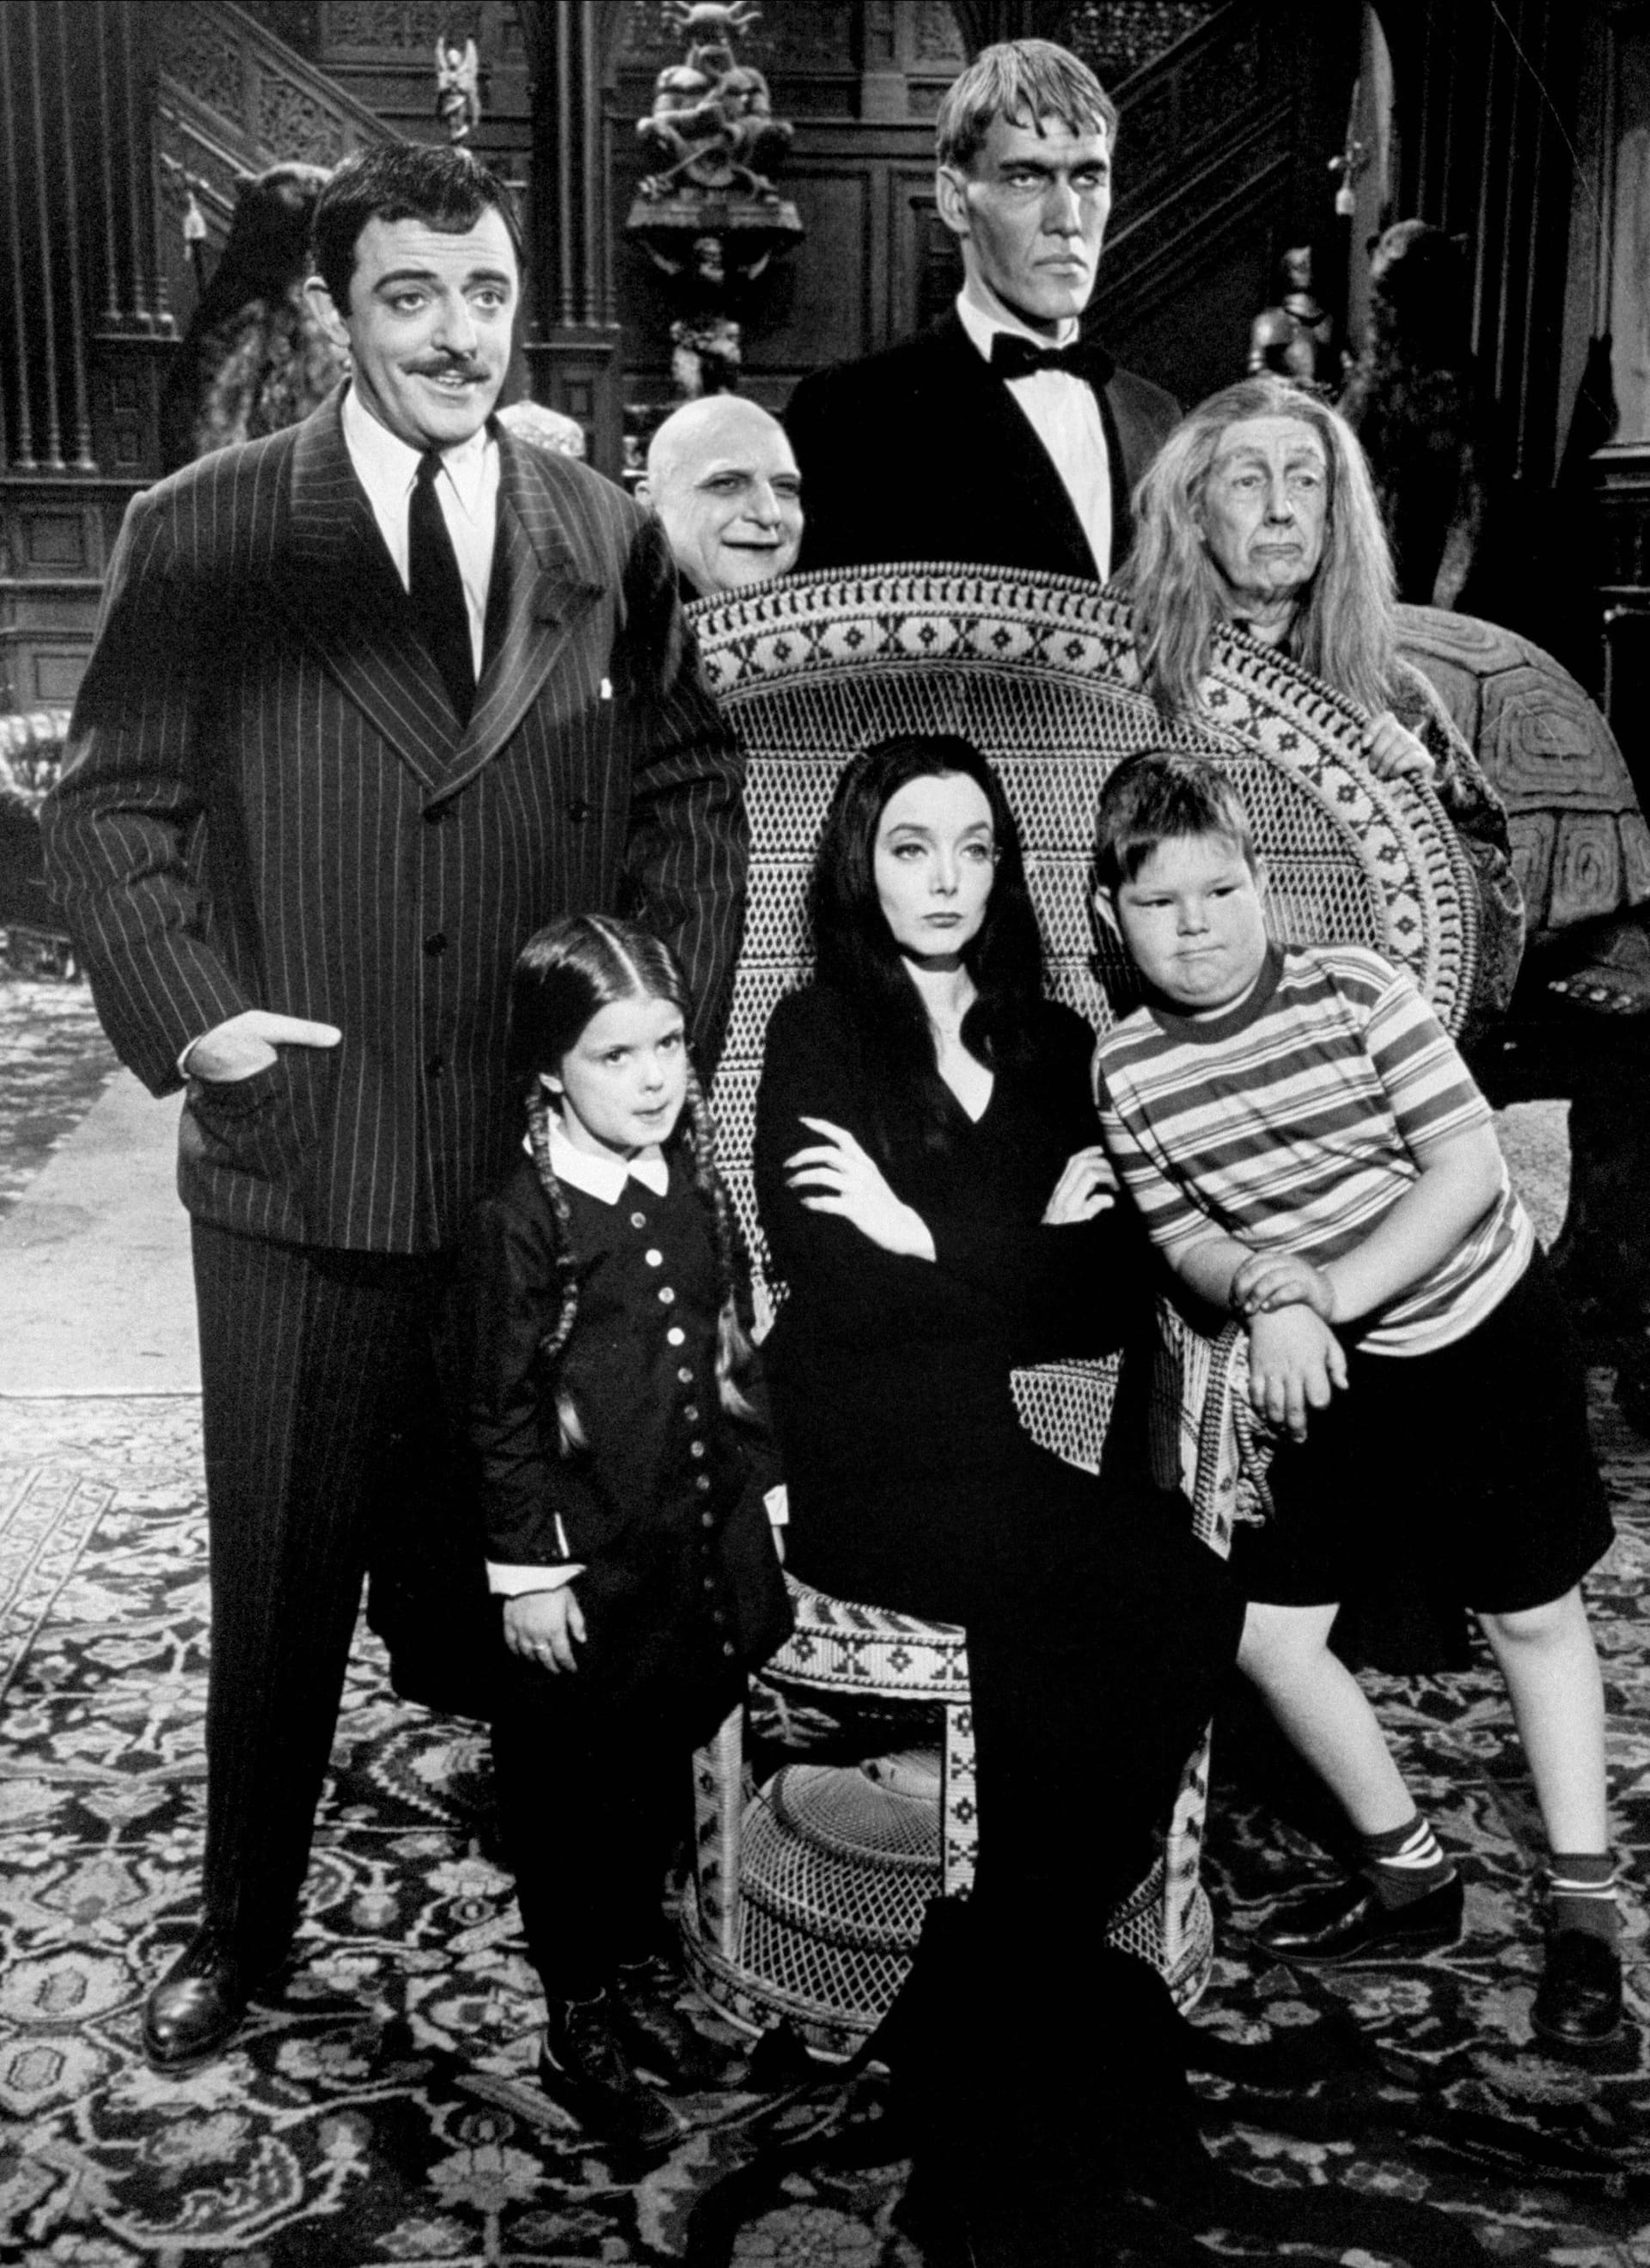 John Astin, Jackie Coogan, Ted Cassidy, Marie Blake, Lisa Loring, Carolyn Jones und Ken Weatherwax in "The Addams Family".